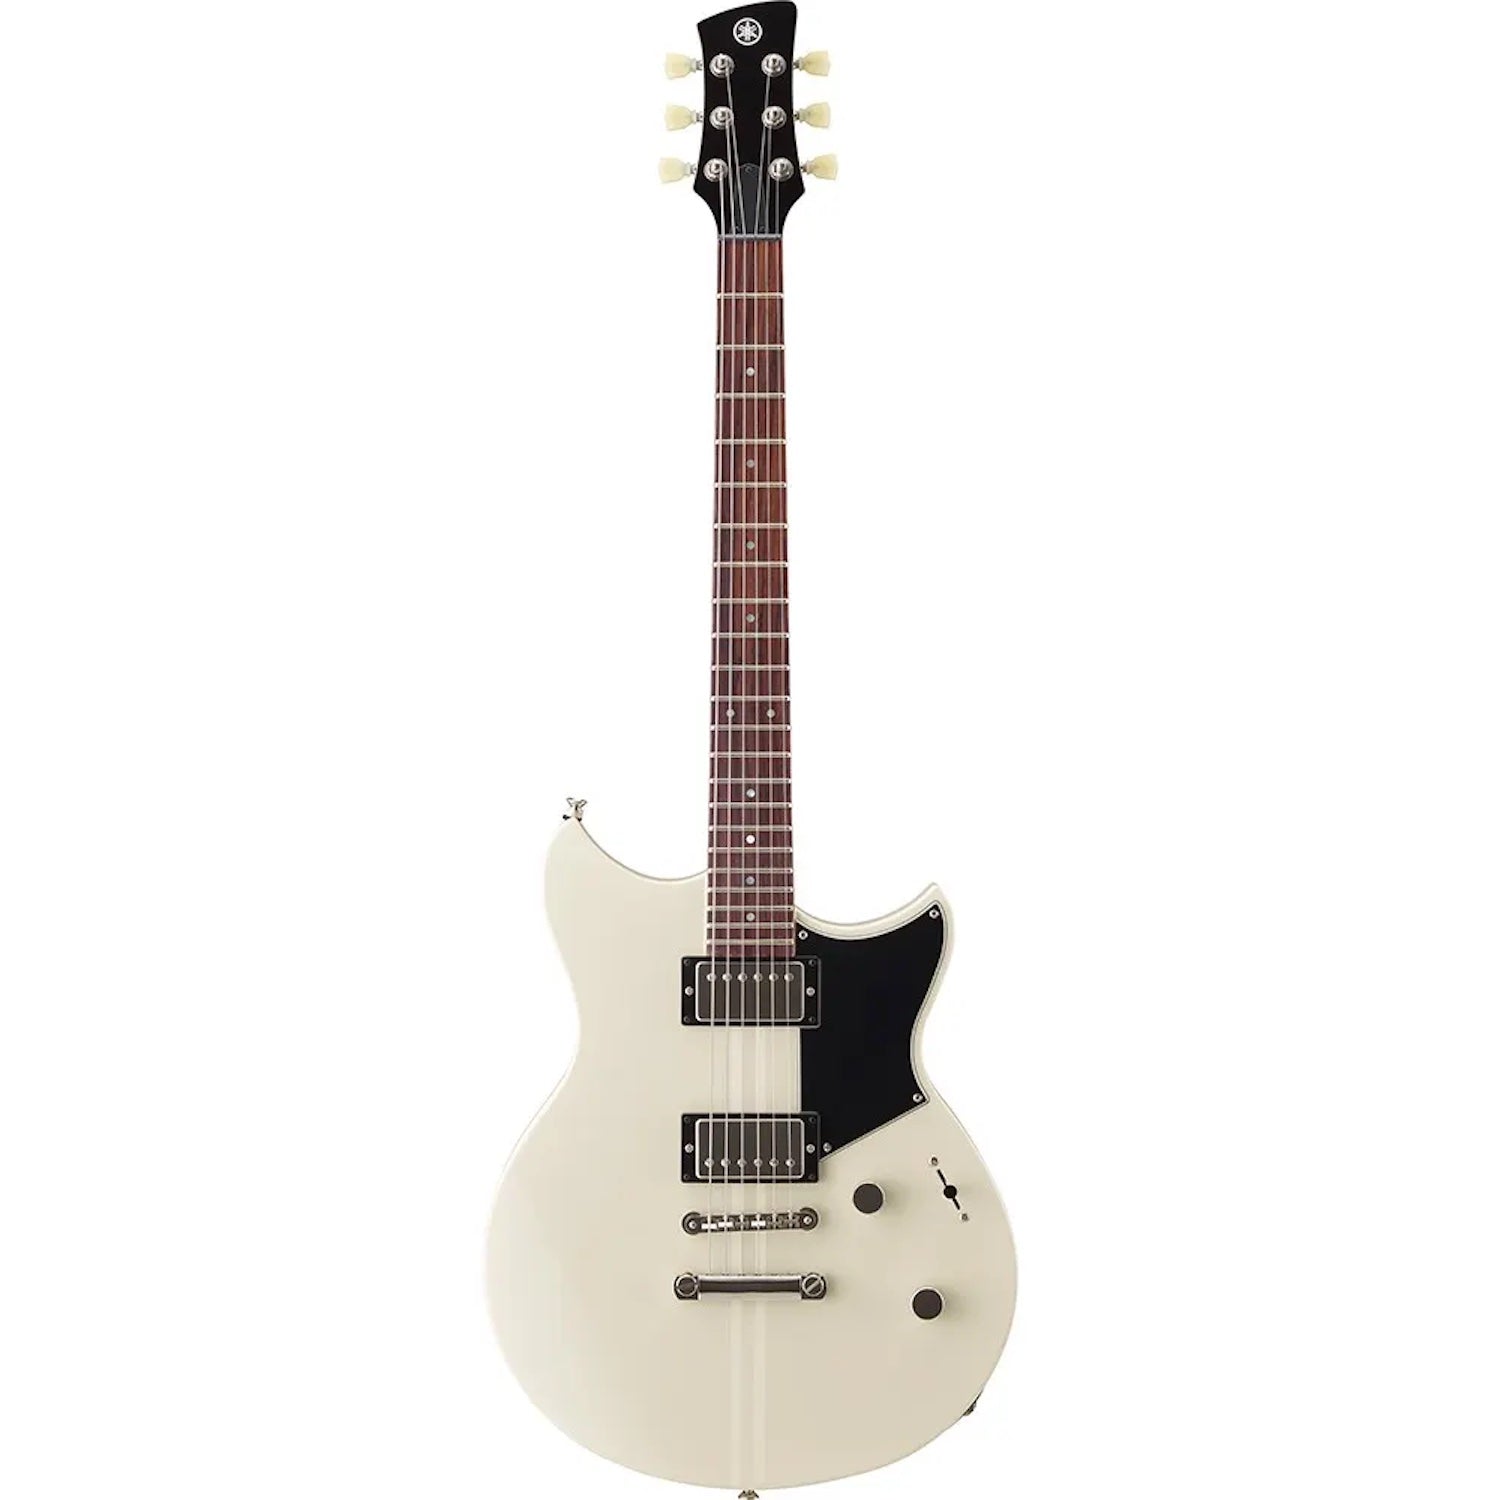 Yamaha Revstar Elements RSE20VW Electric Guitar - Vintage White